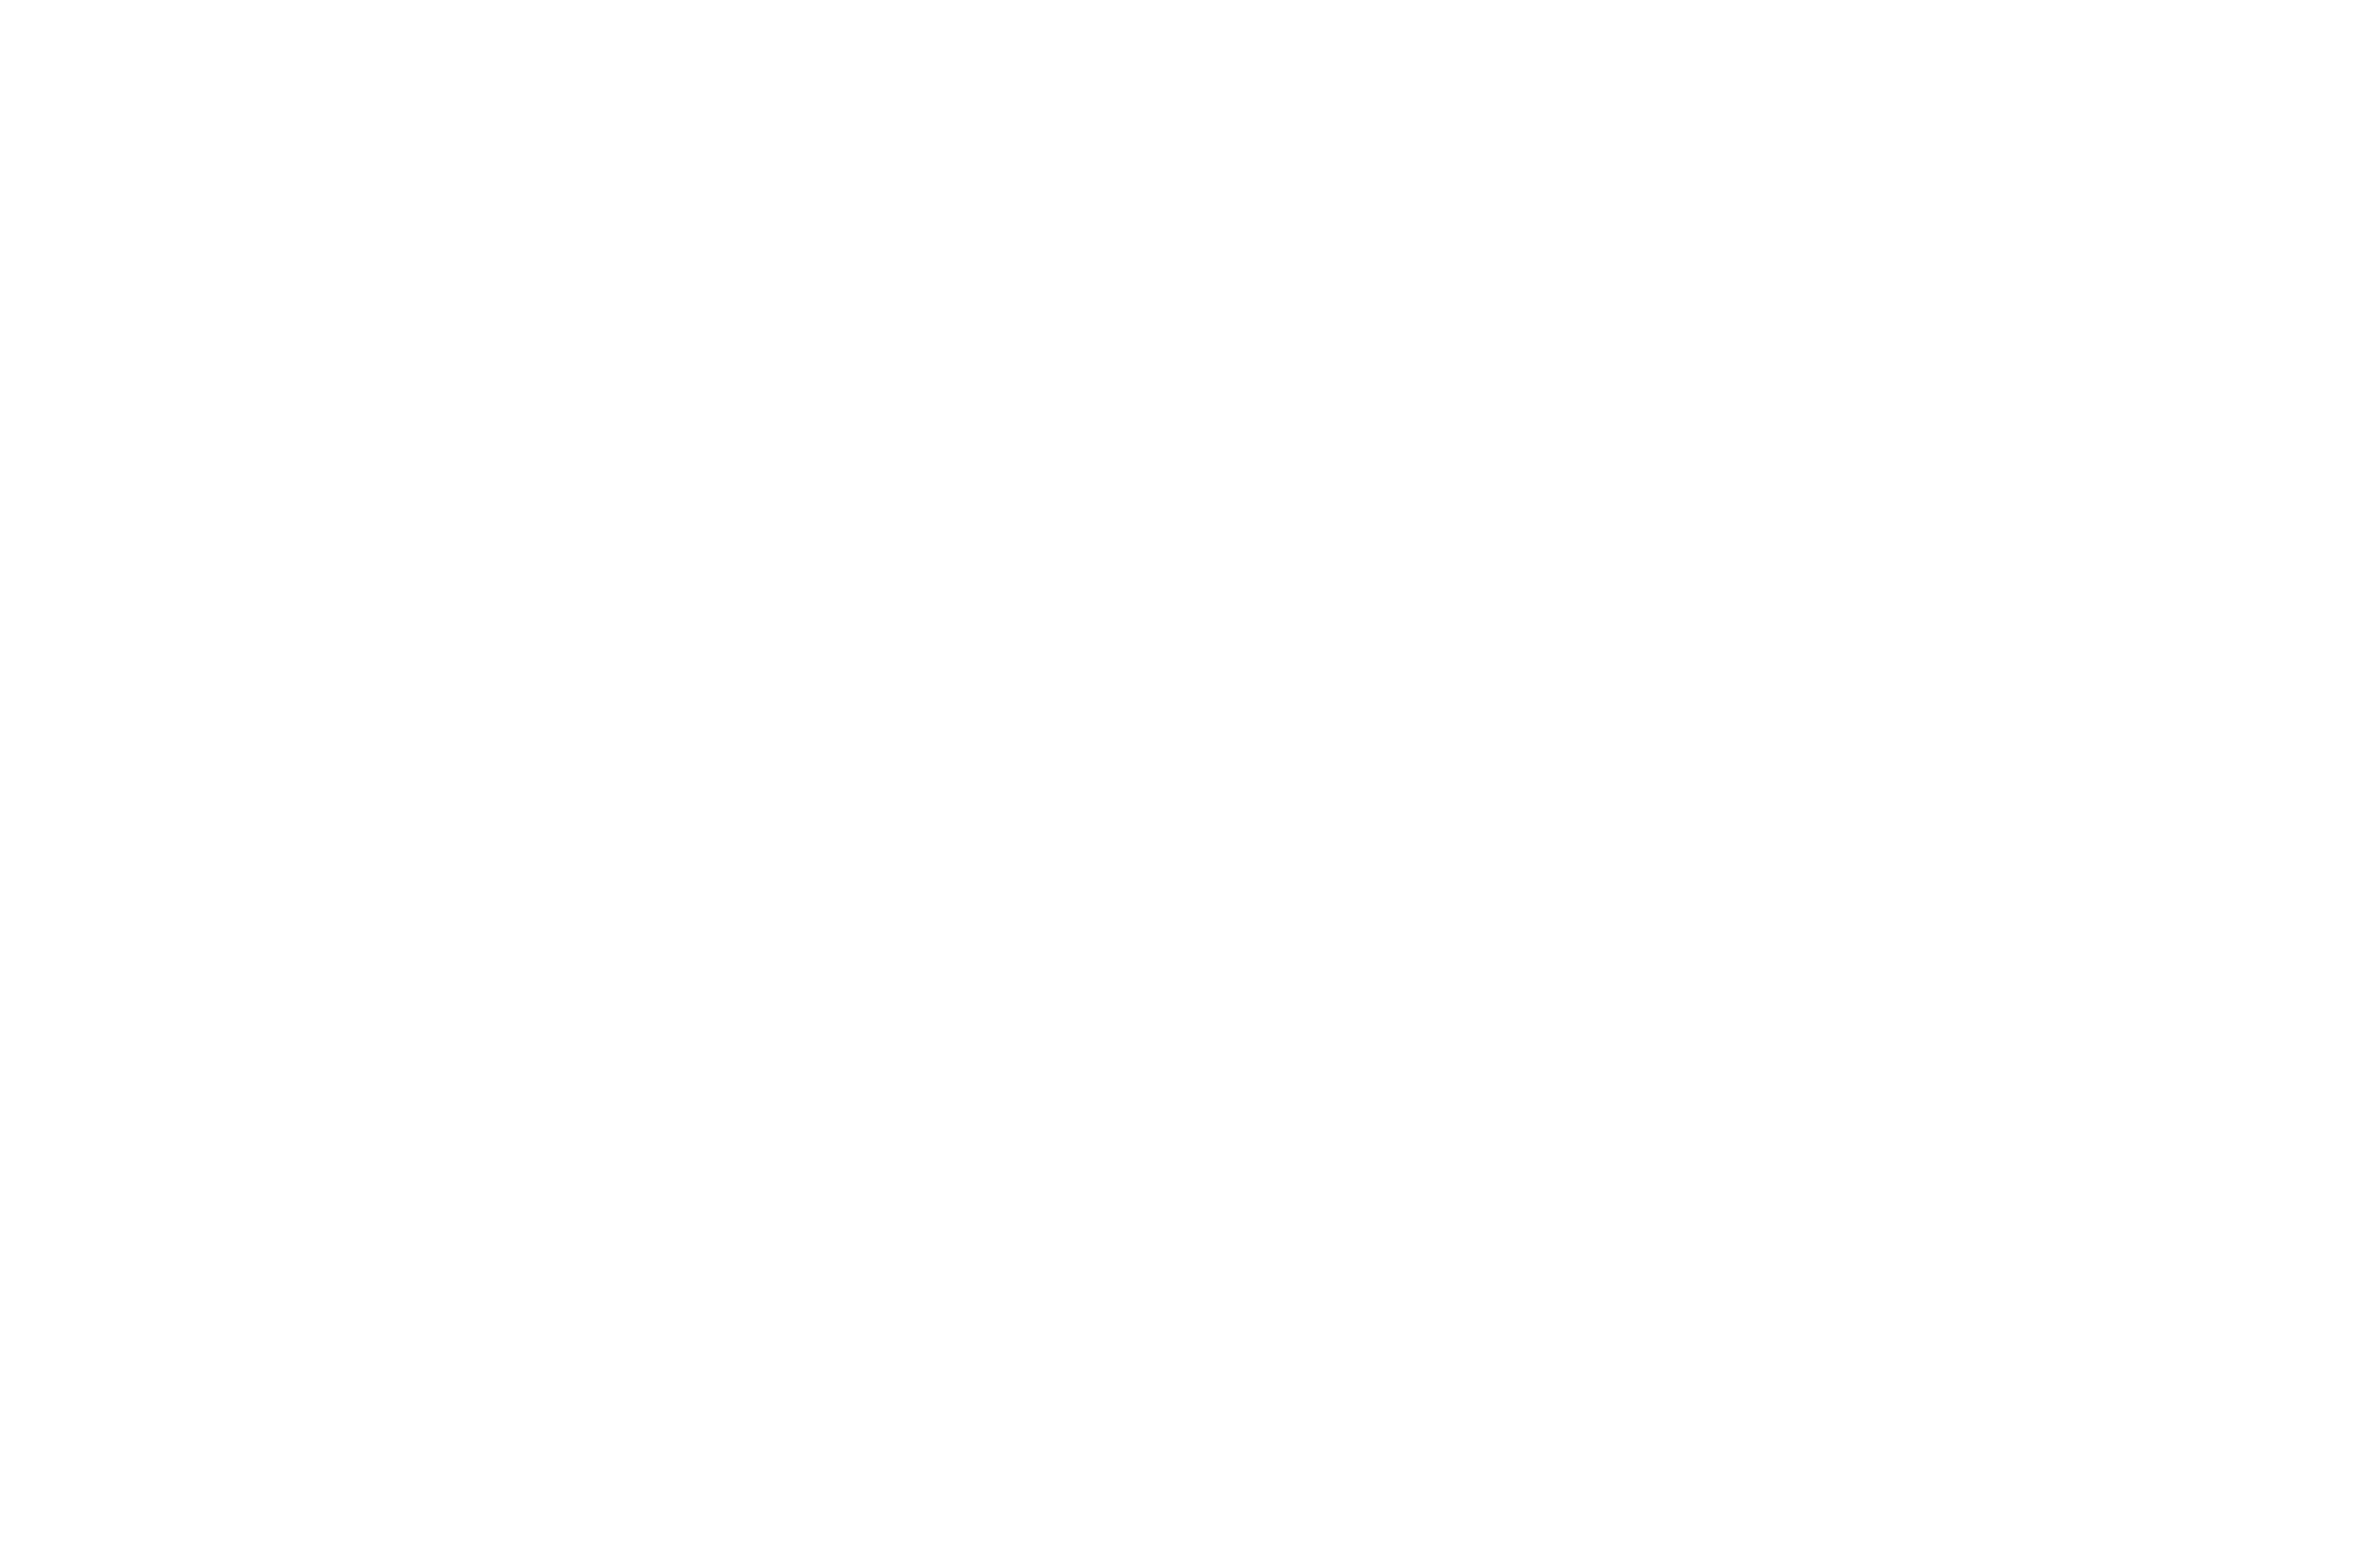 OFFICIALSELECTION-70thMontecatiniInternationalShortFilmFestival-2019-1.png